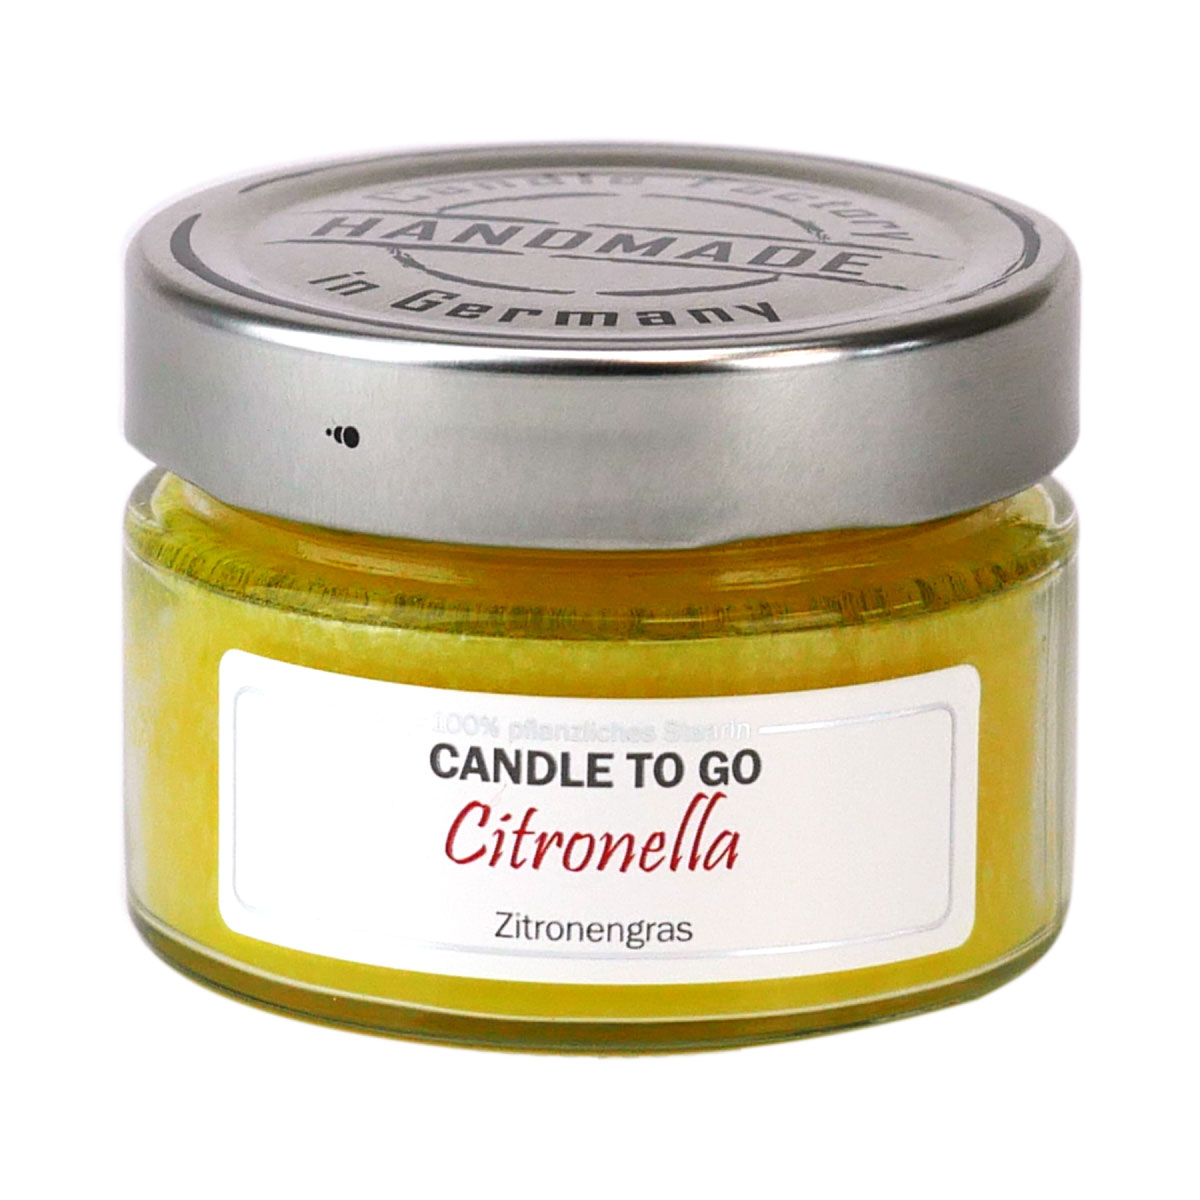 Citronella - Candle to Go Duftkerze von Candle Factory